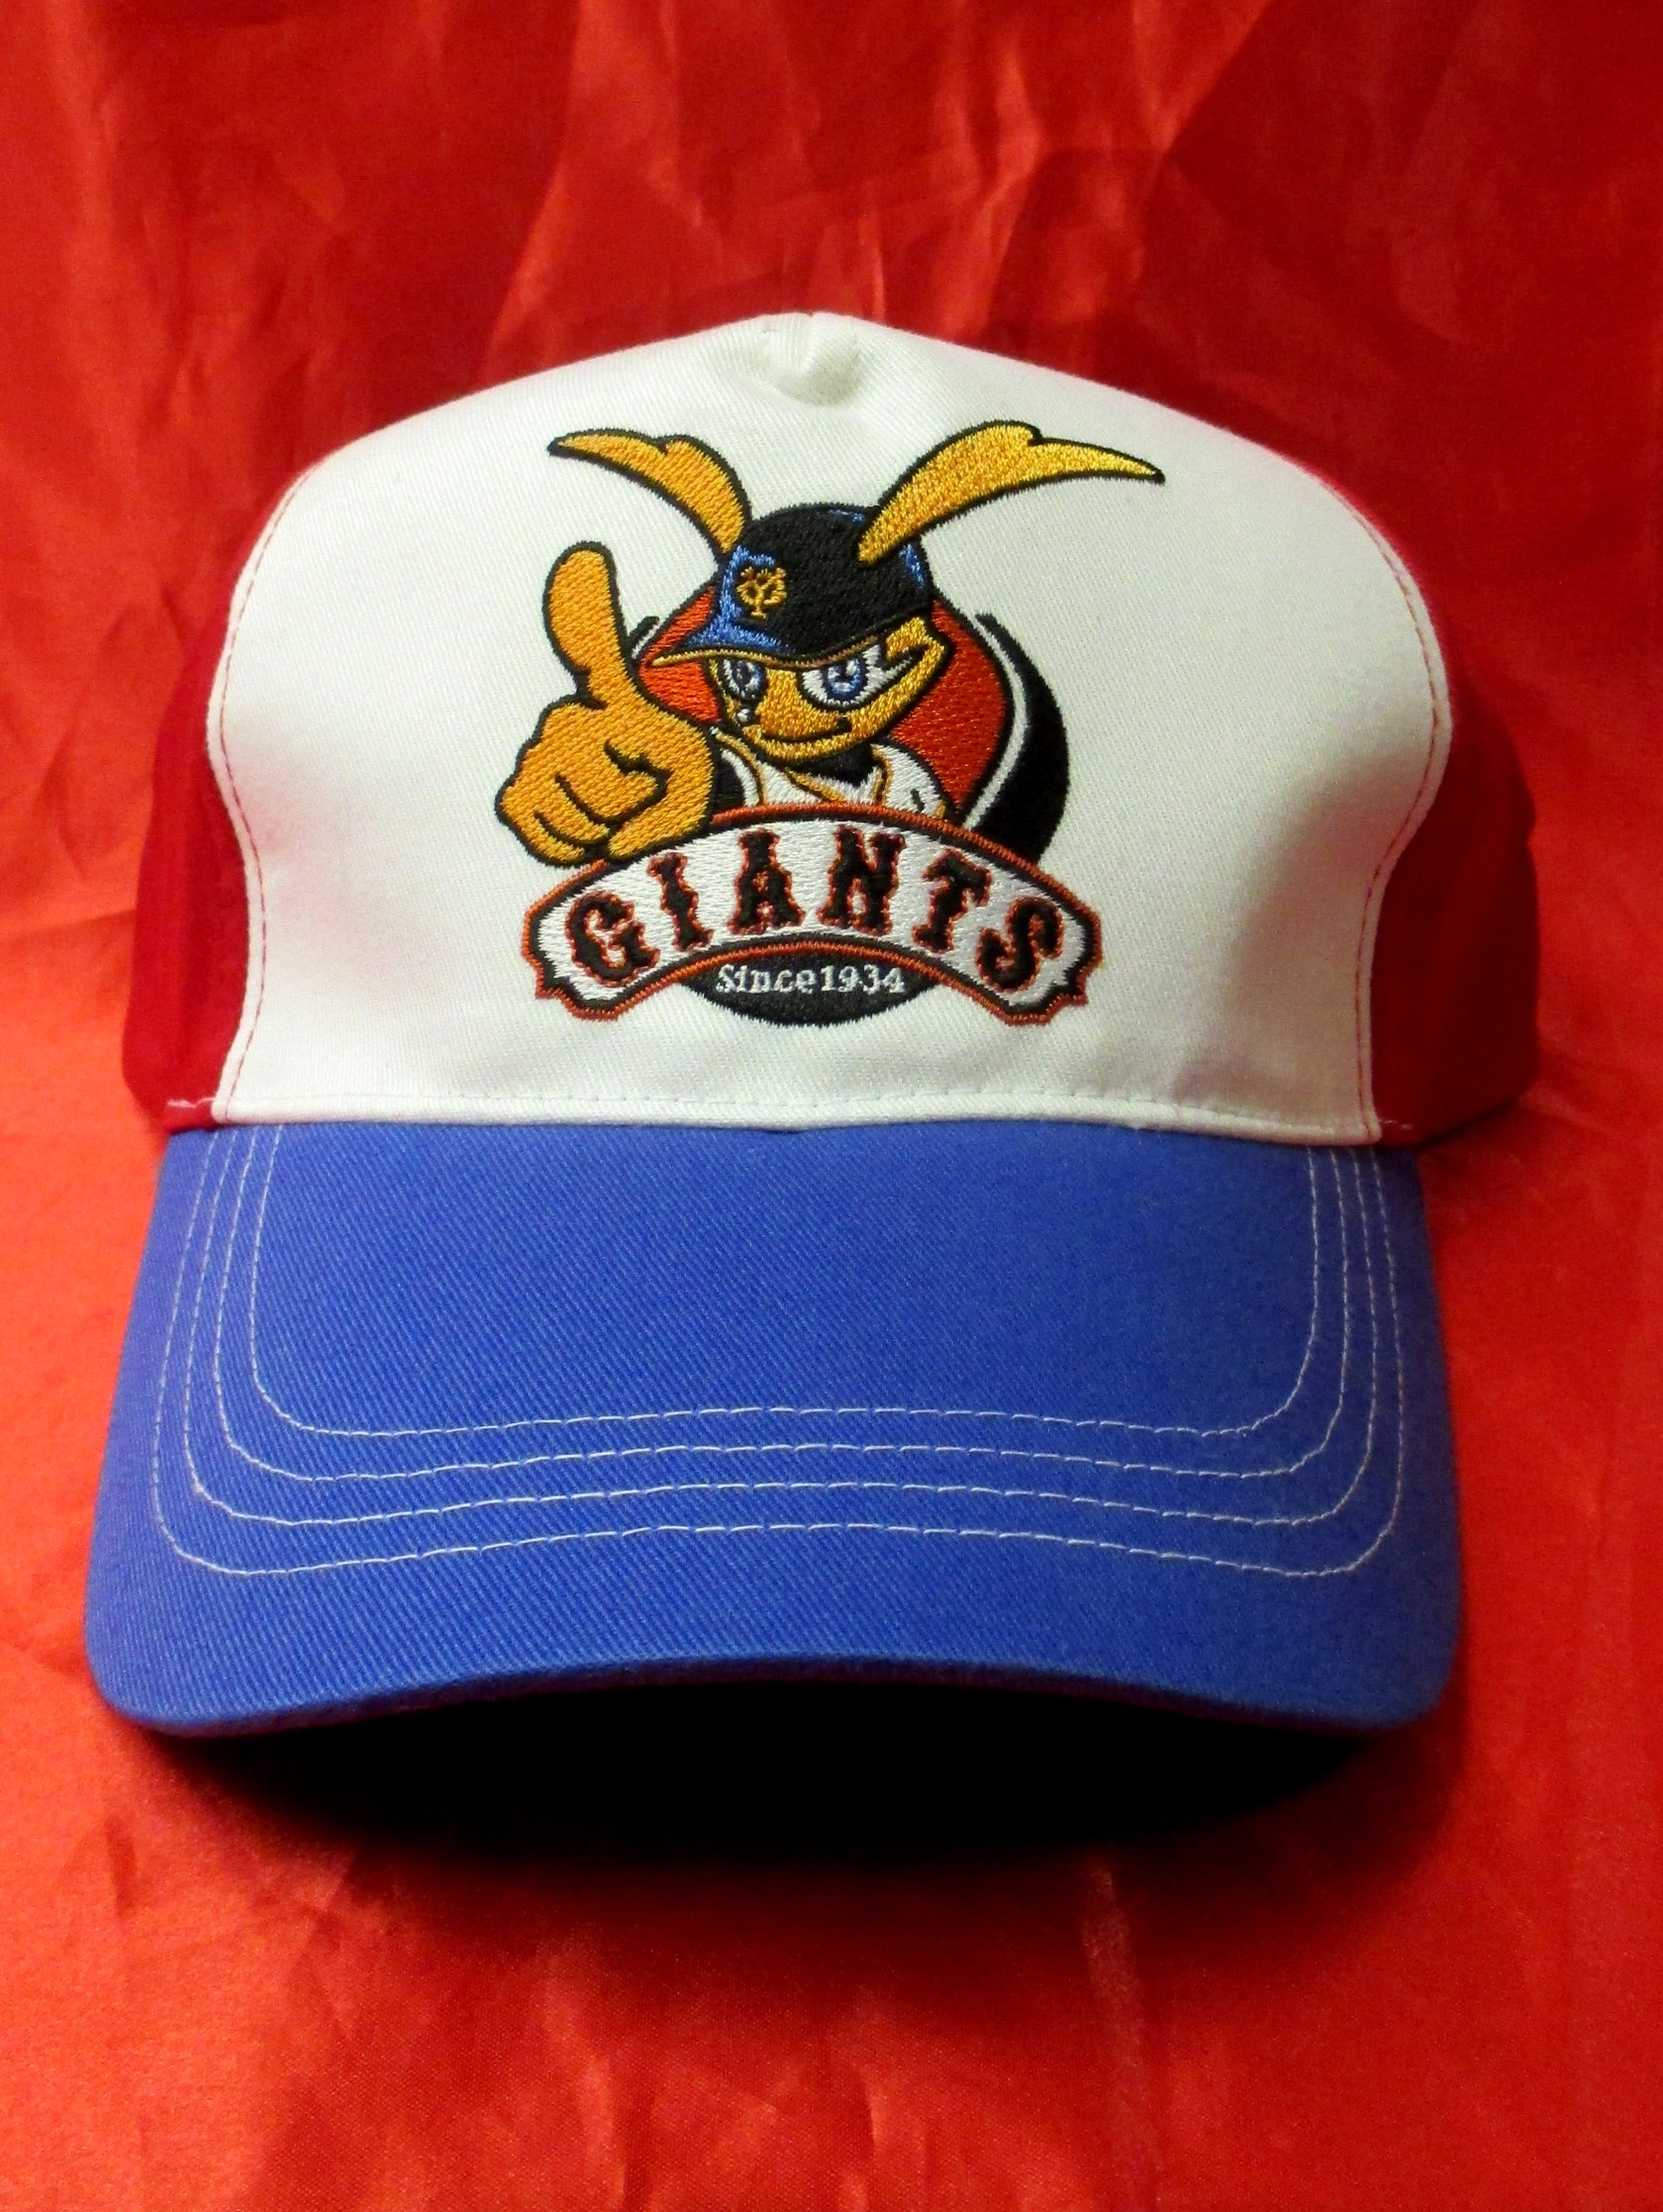 The Yomiuri Giants baseball stadium distribution GIANTS cap winning Yomiuri Giants Giabbit Mandarake Online Shop